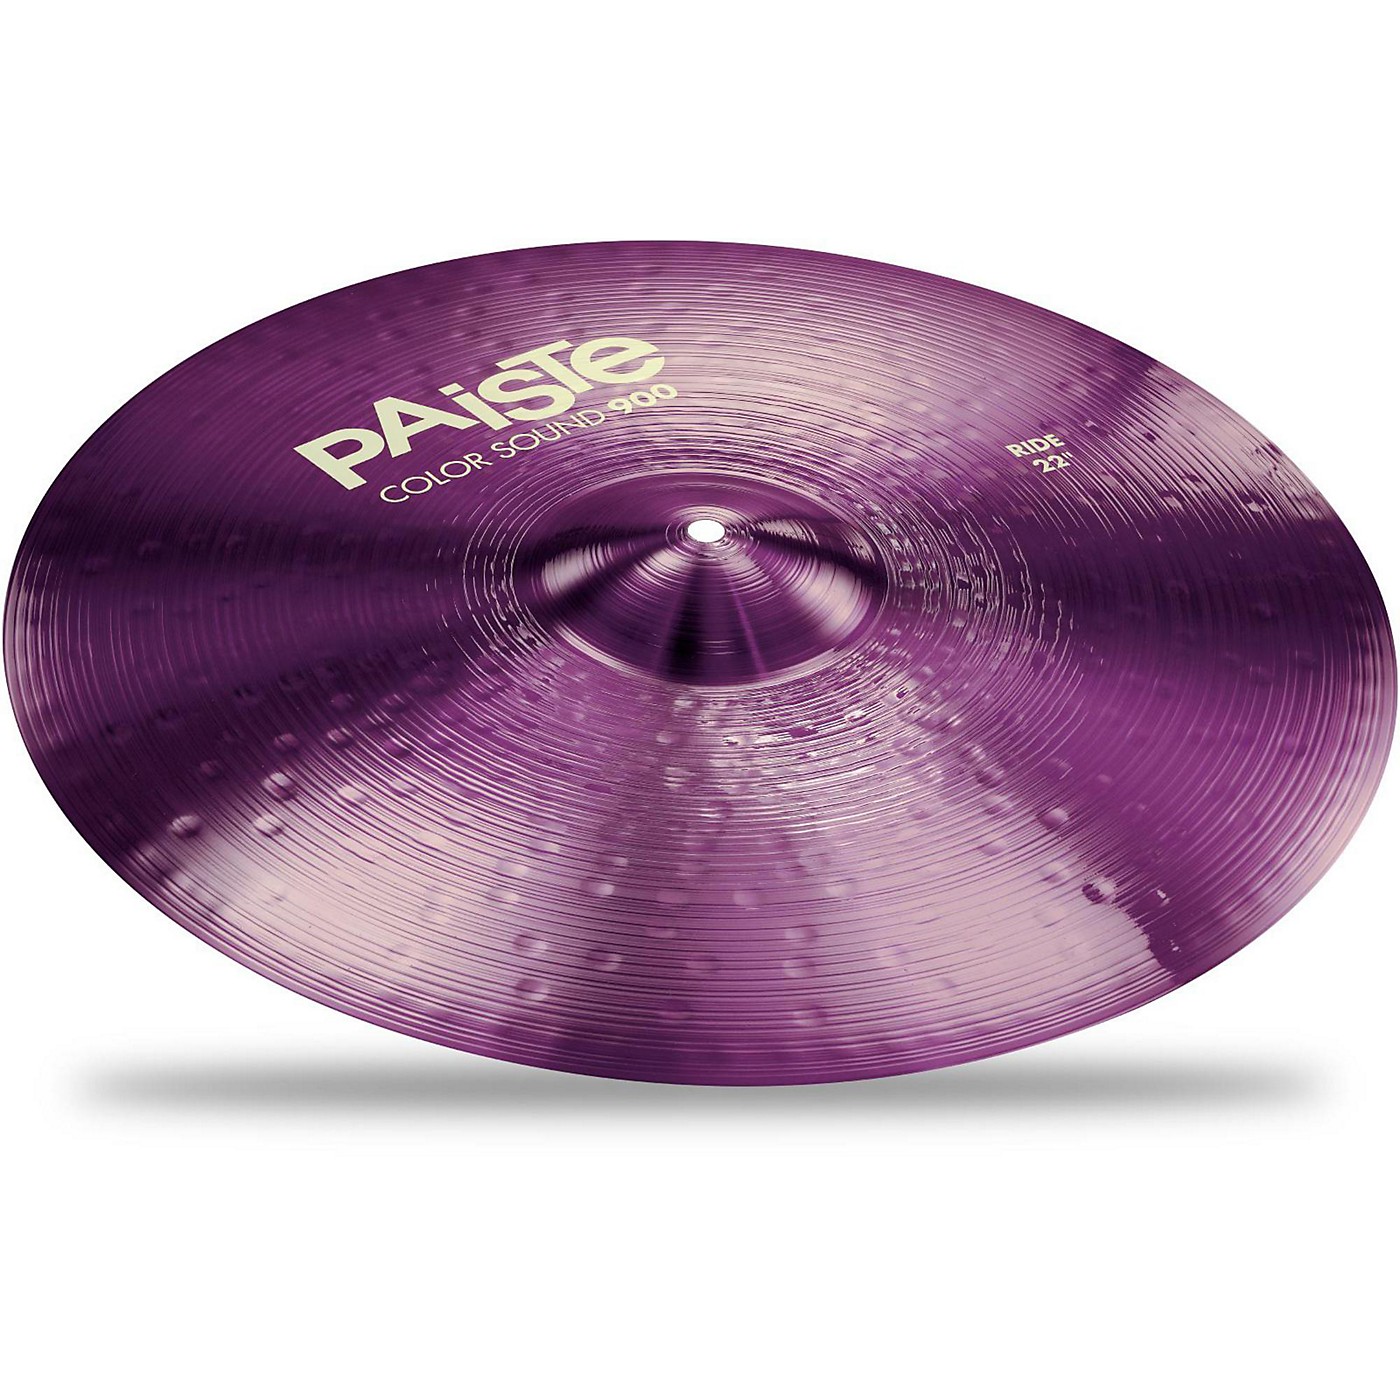 Paiste Colorsound 900 Ride Cymbal Purple thumbnail